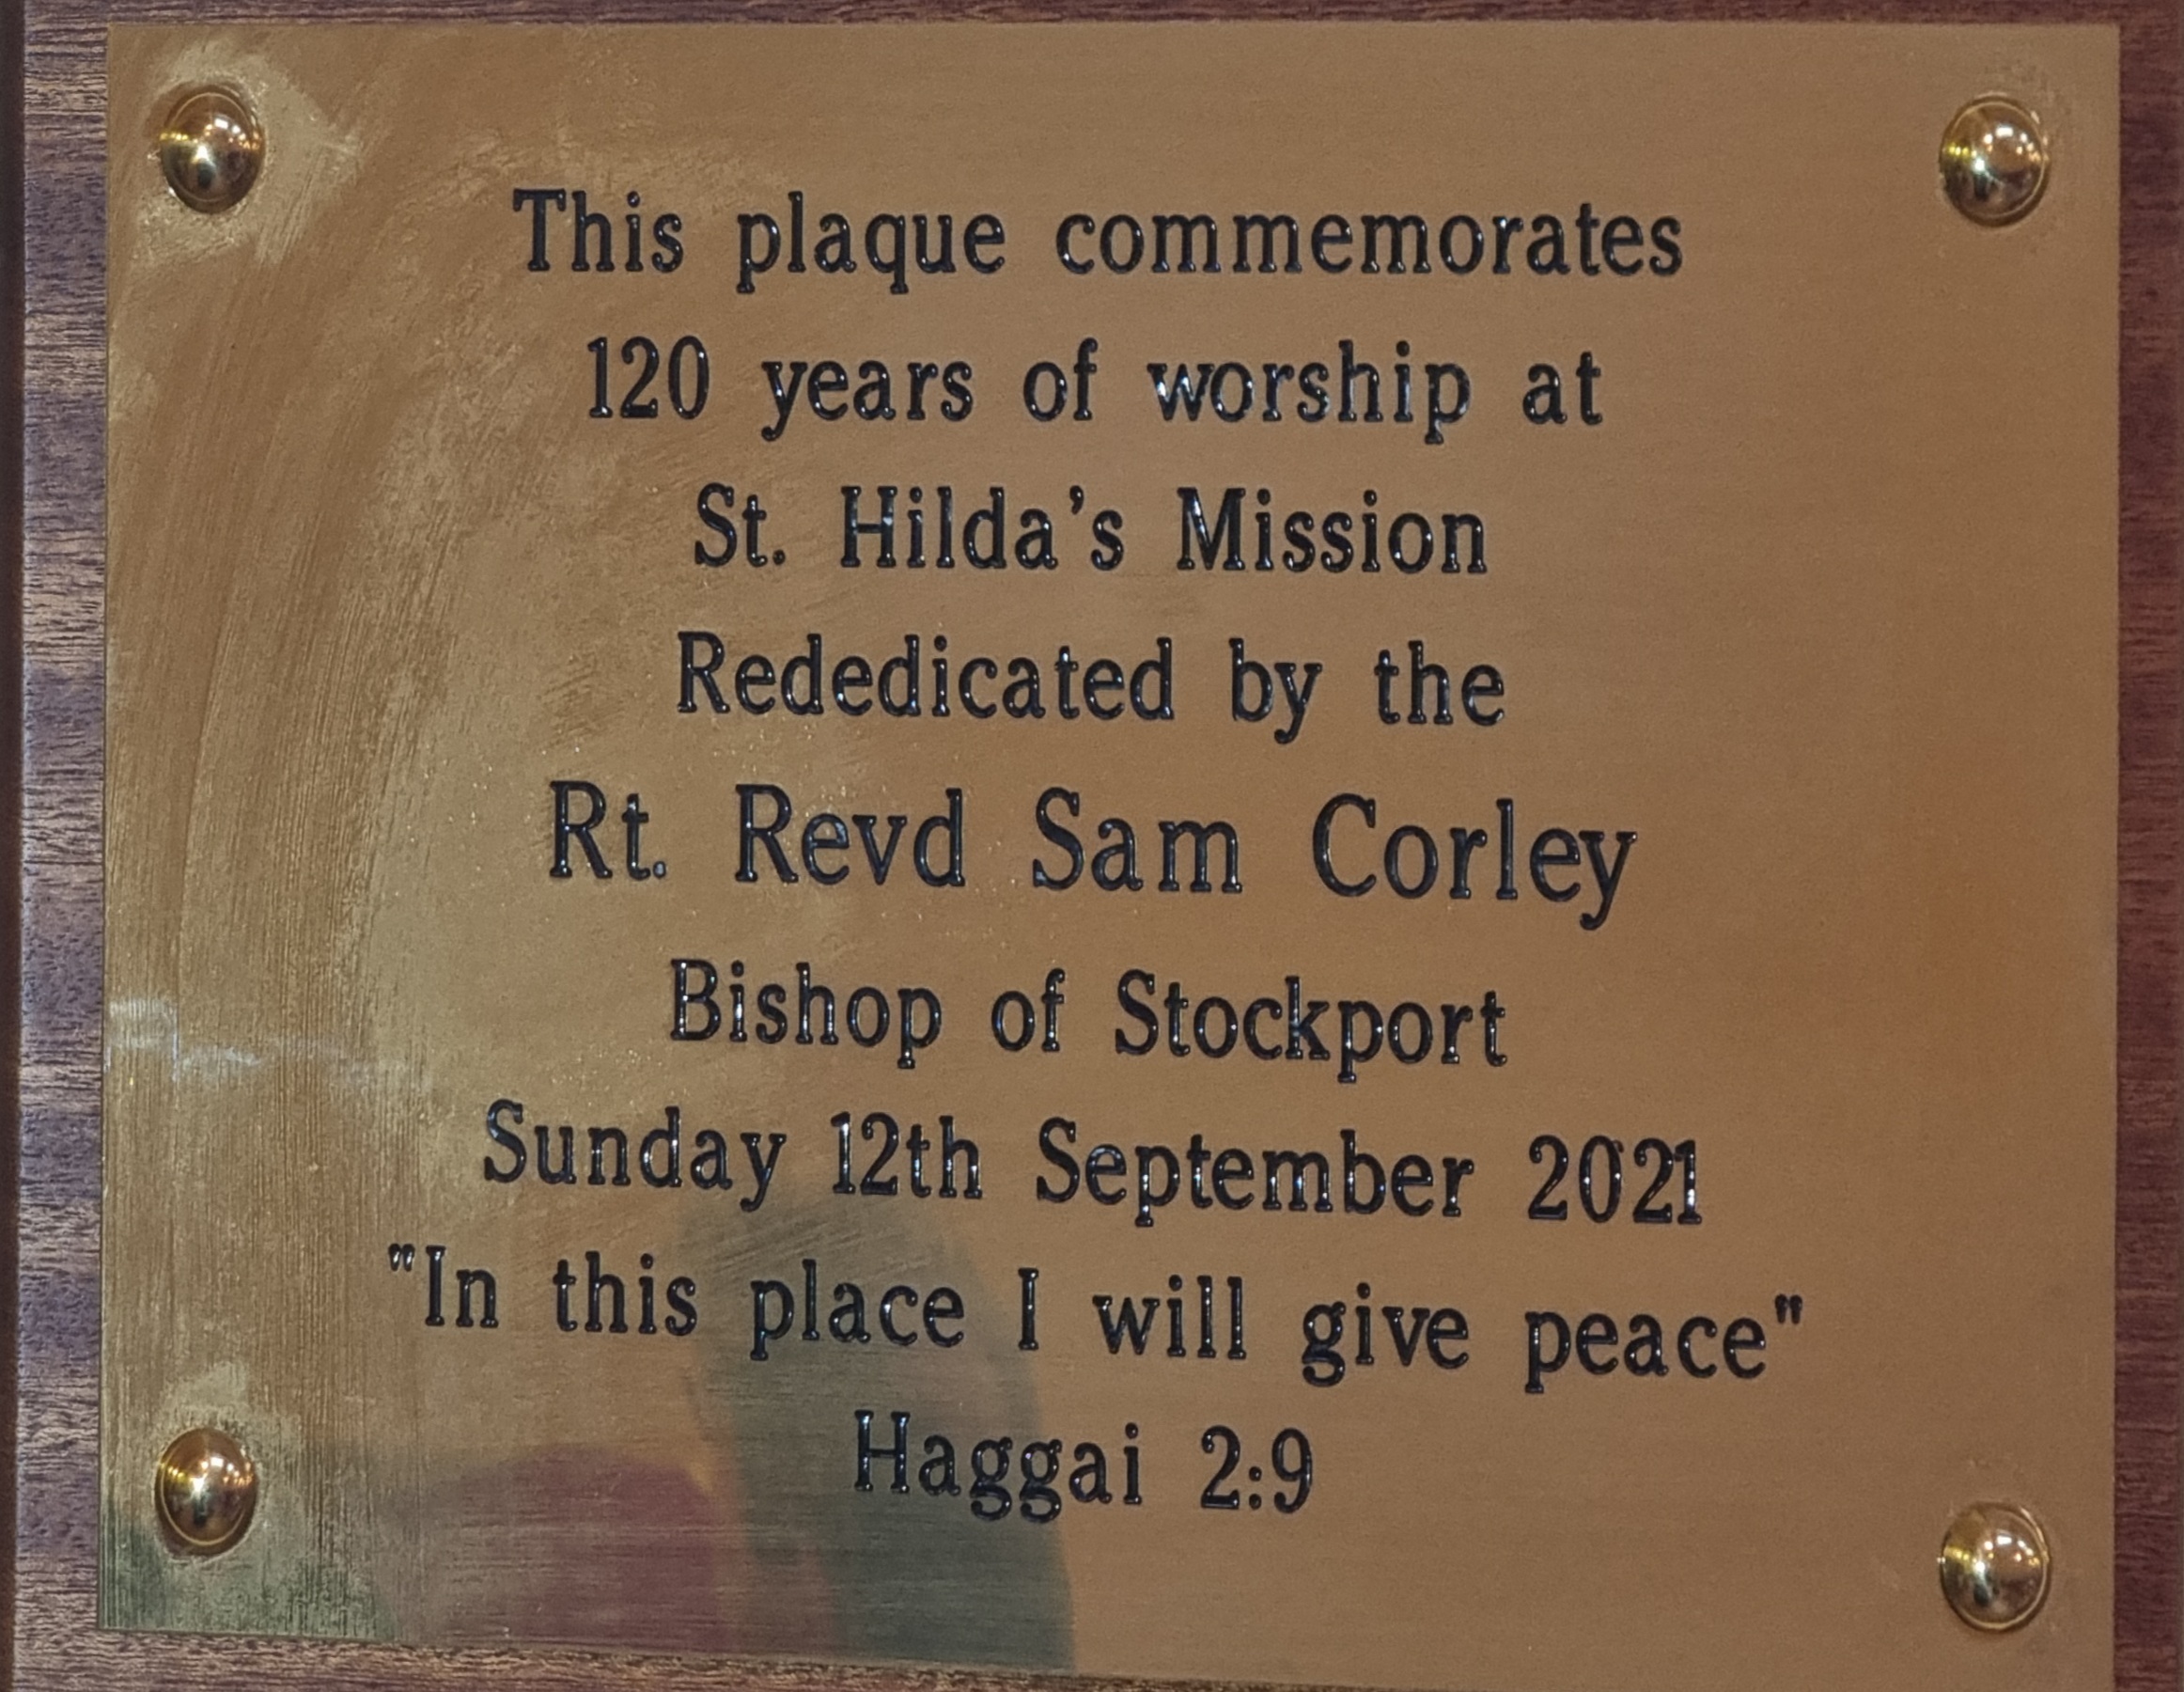 The 120th anniversary plaque.